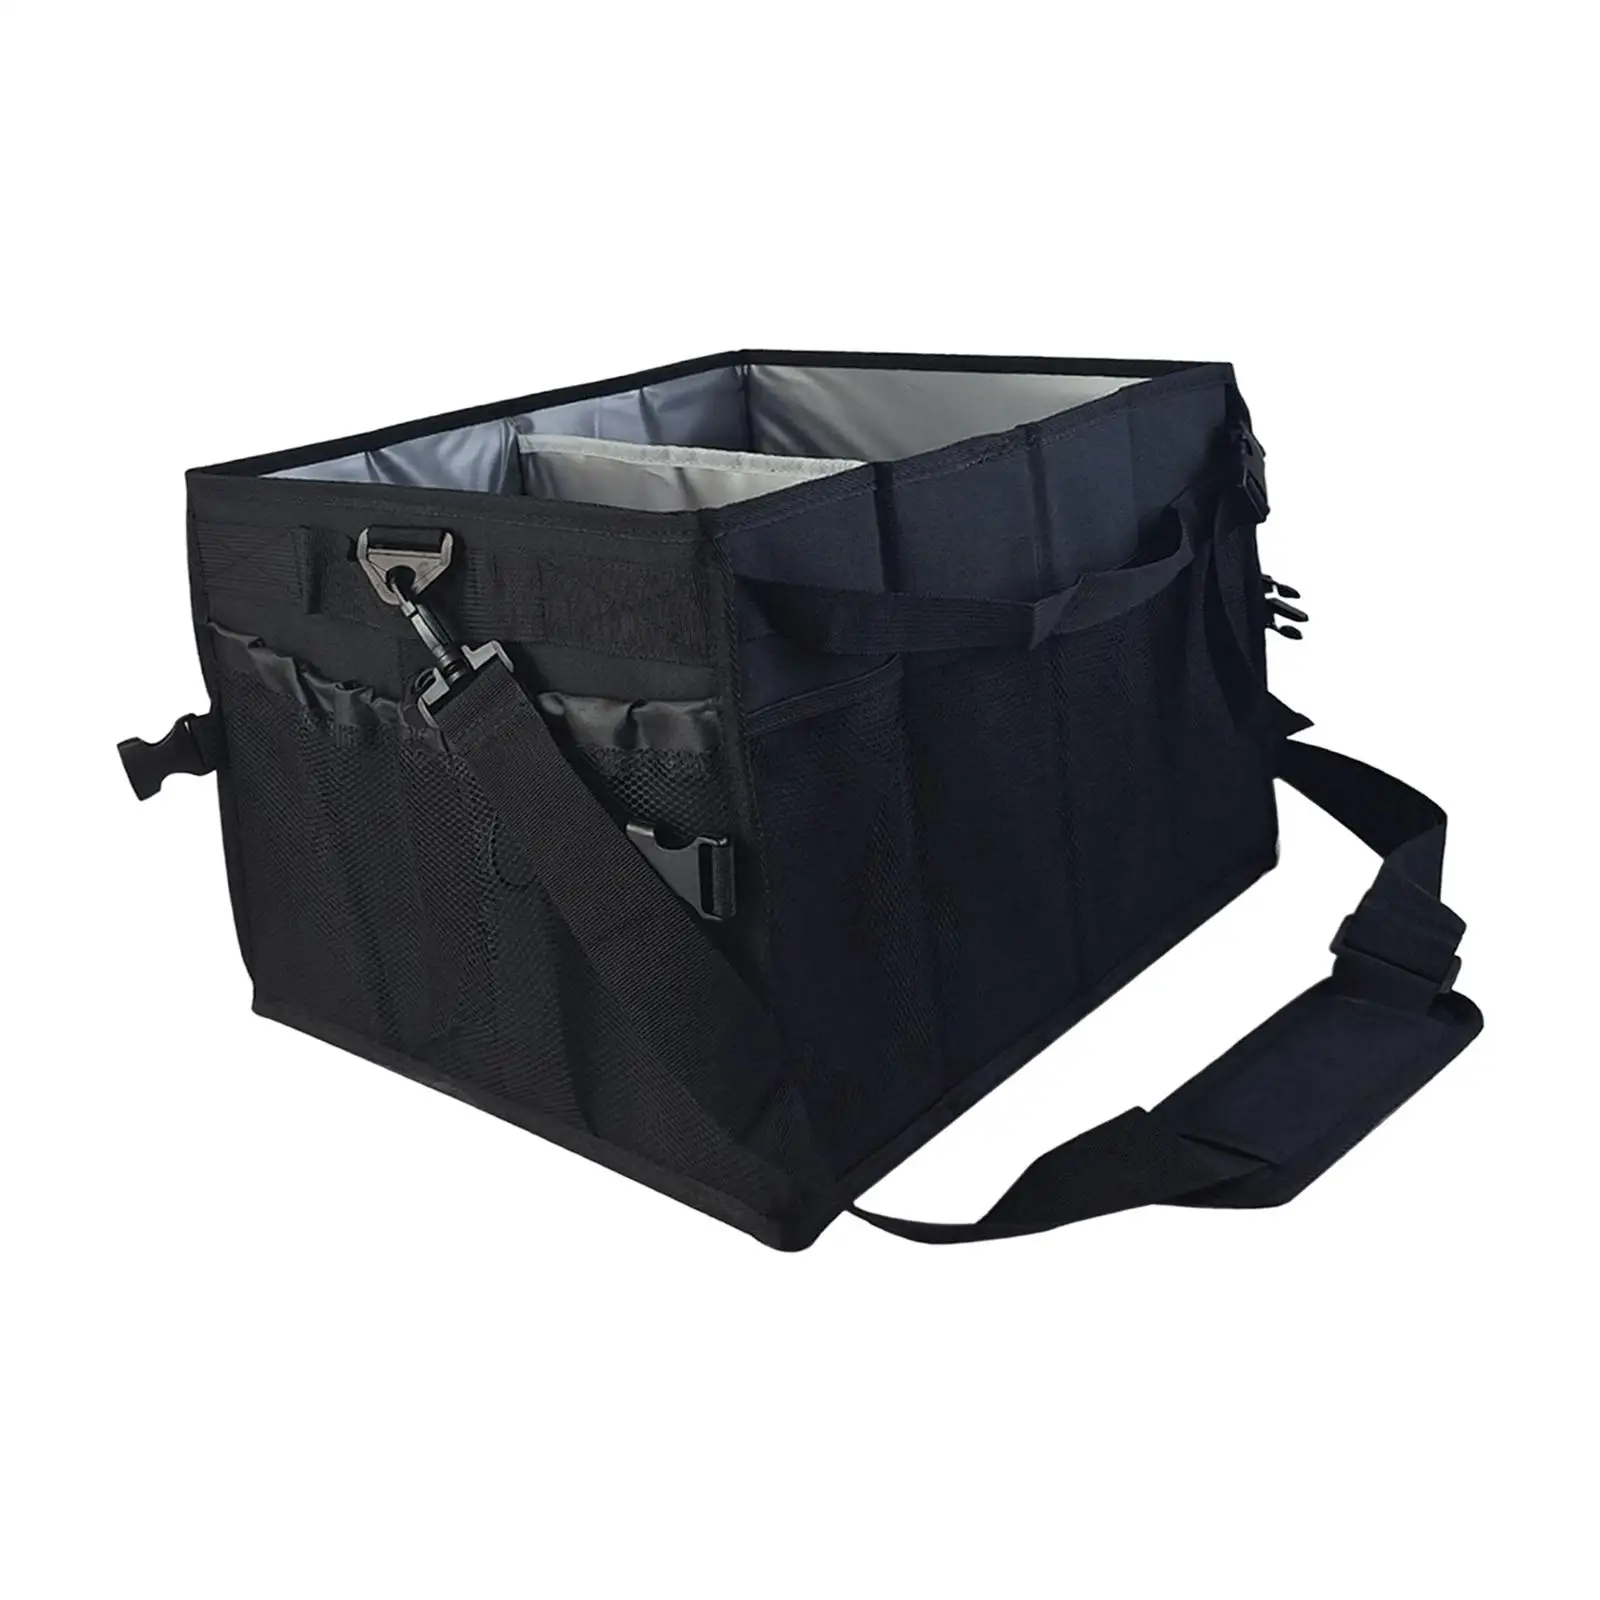 Portable BBQ Tool Storage Bag Grill Tool Carrying Bag Organizer for Picnic Trip